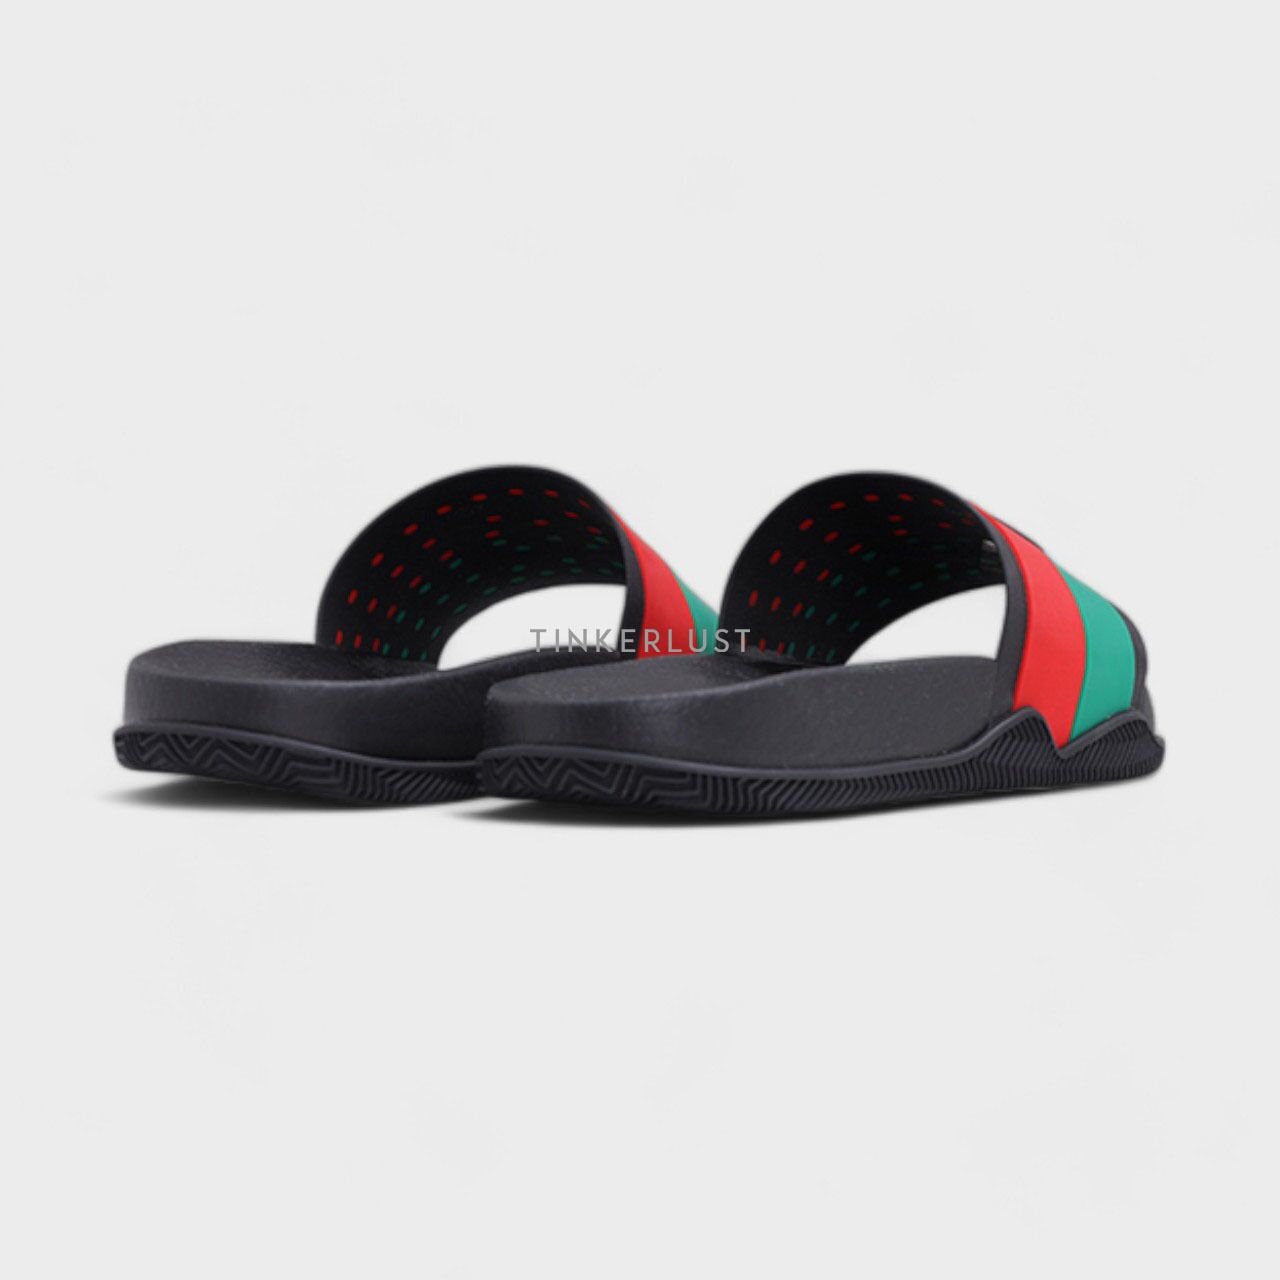 Gucci Men Interlocking G Slides in Black with Red/Green Striped